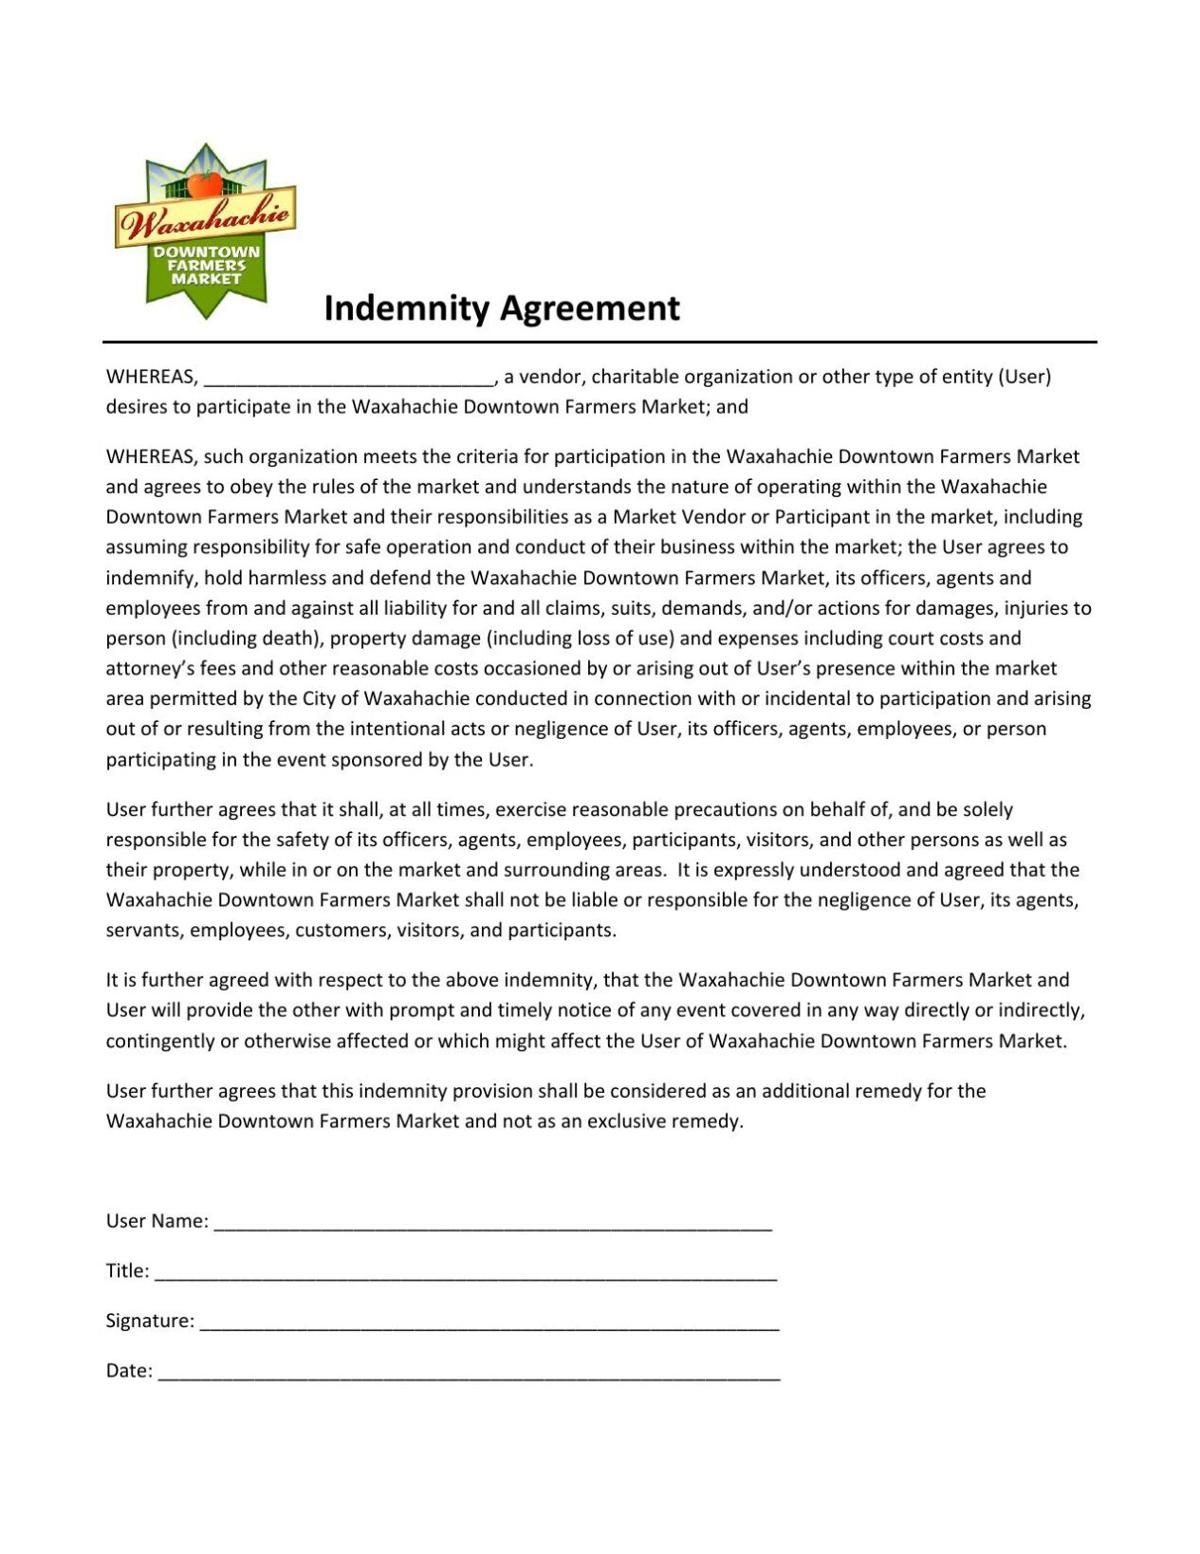 Indemnity Agreement.pdf